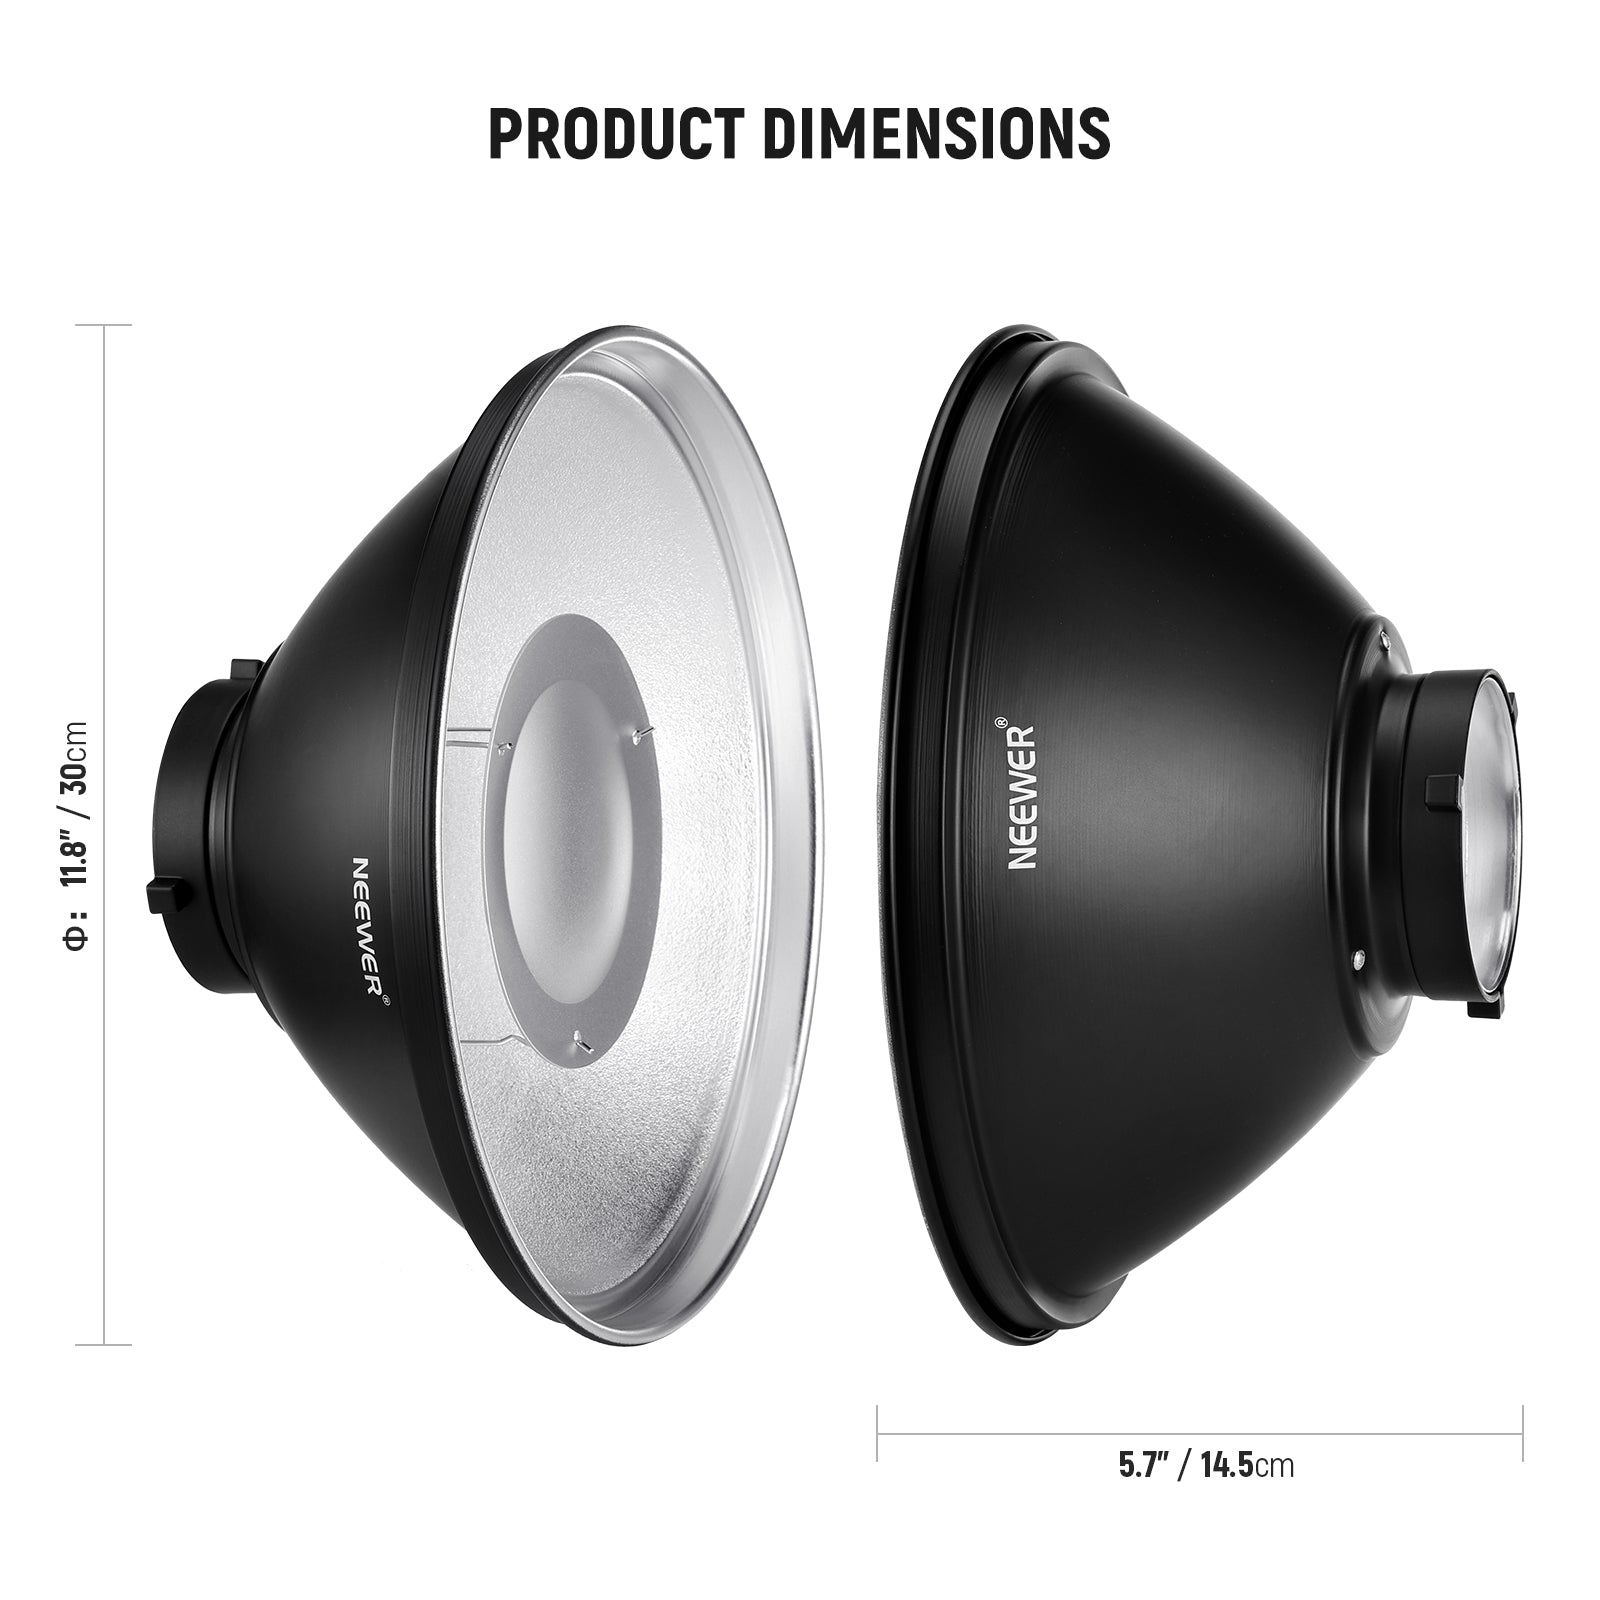 NEEWER Studio Strobe Flash Light Reflector Beauty Dish